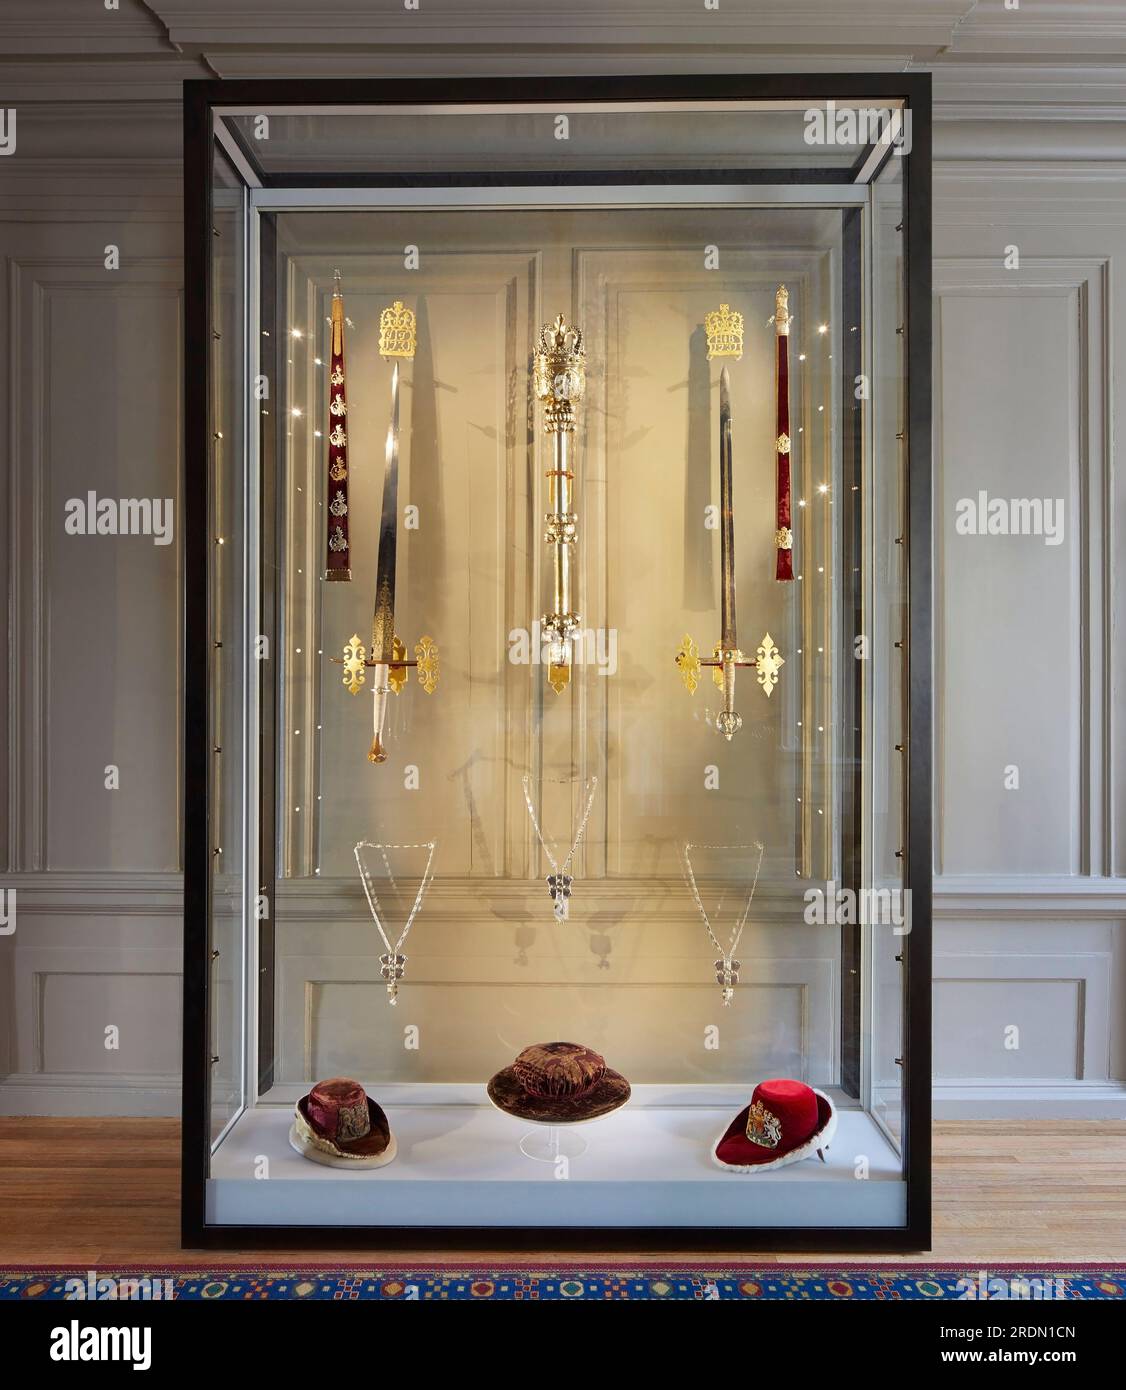 Ceremonial swords and the Mayors Mace inside glass display cabinet. York Mansion House, York, United Kingdom. Architect: De Matos Ryan, 2018. Stock Photo